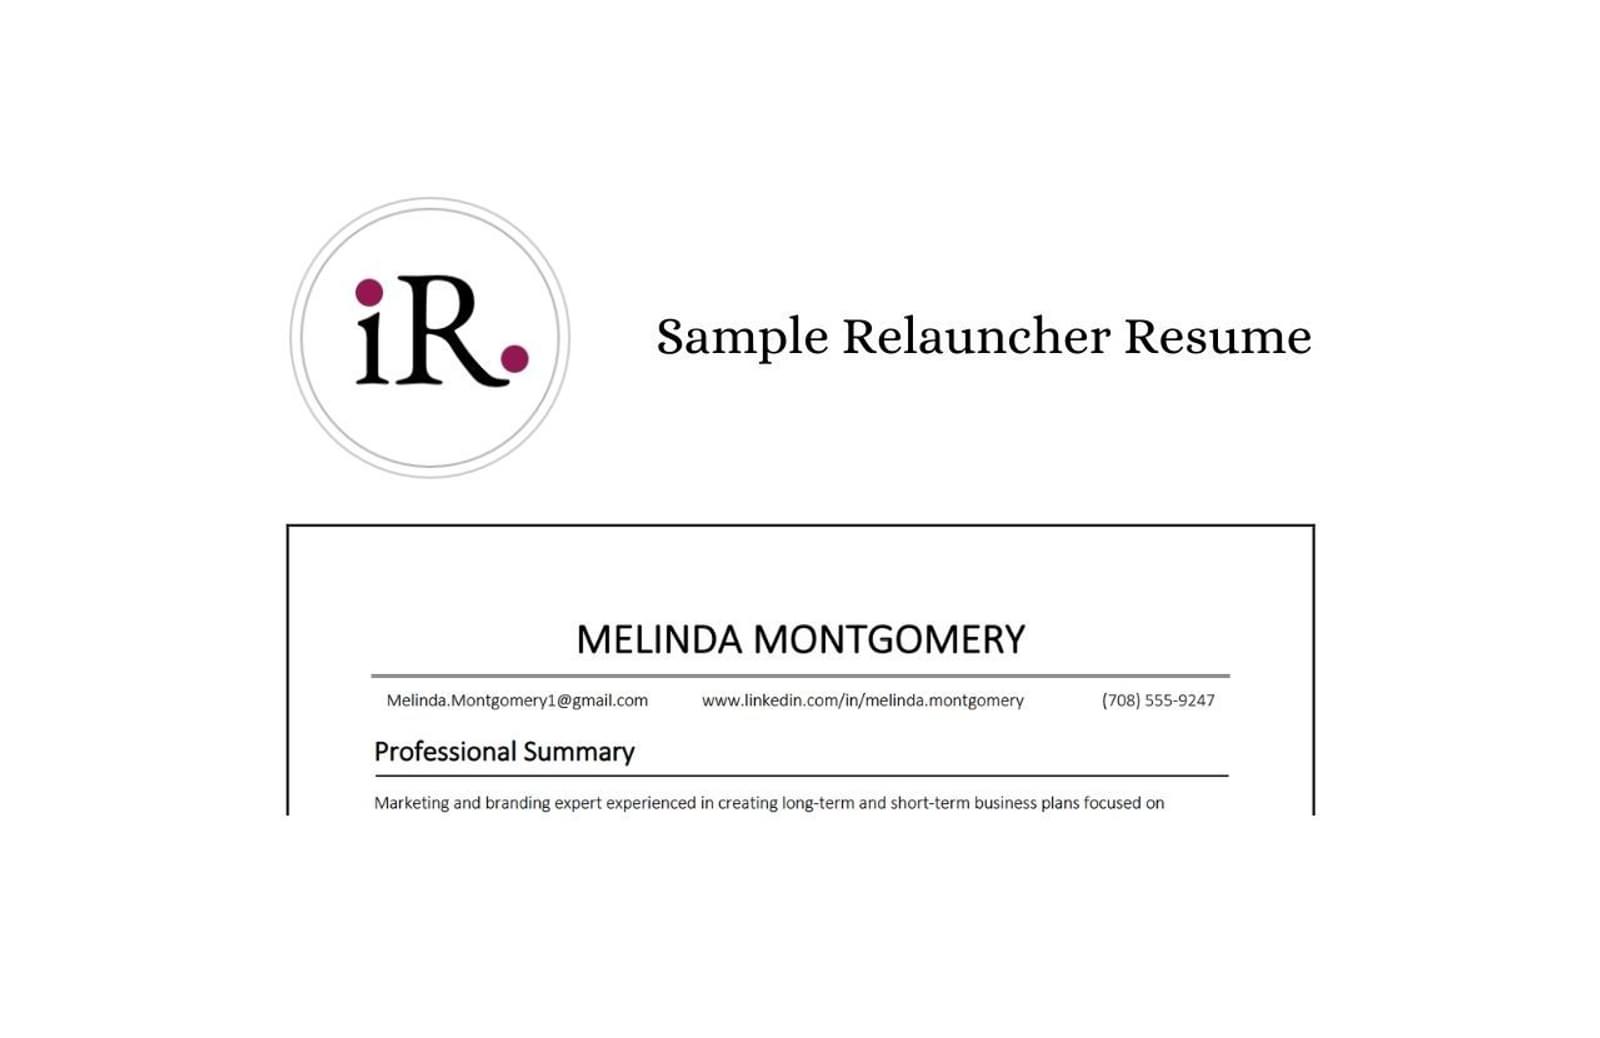 Sample Relauncher Resume Melinda Montgomery Thumbnail